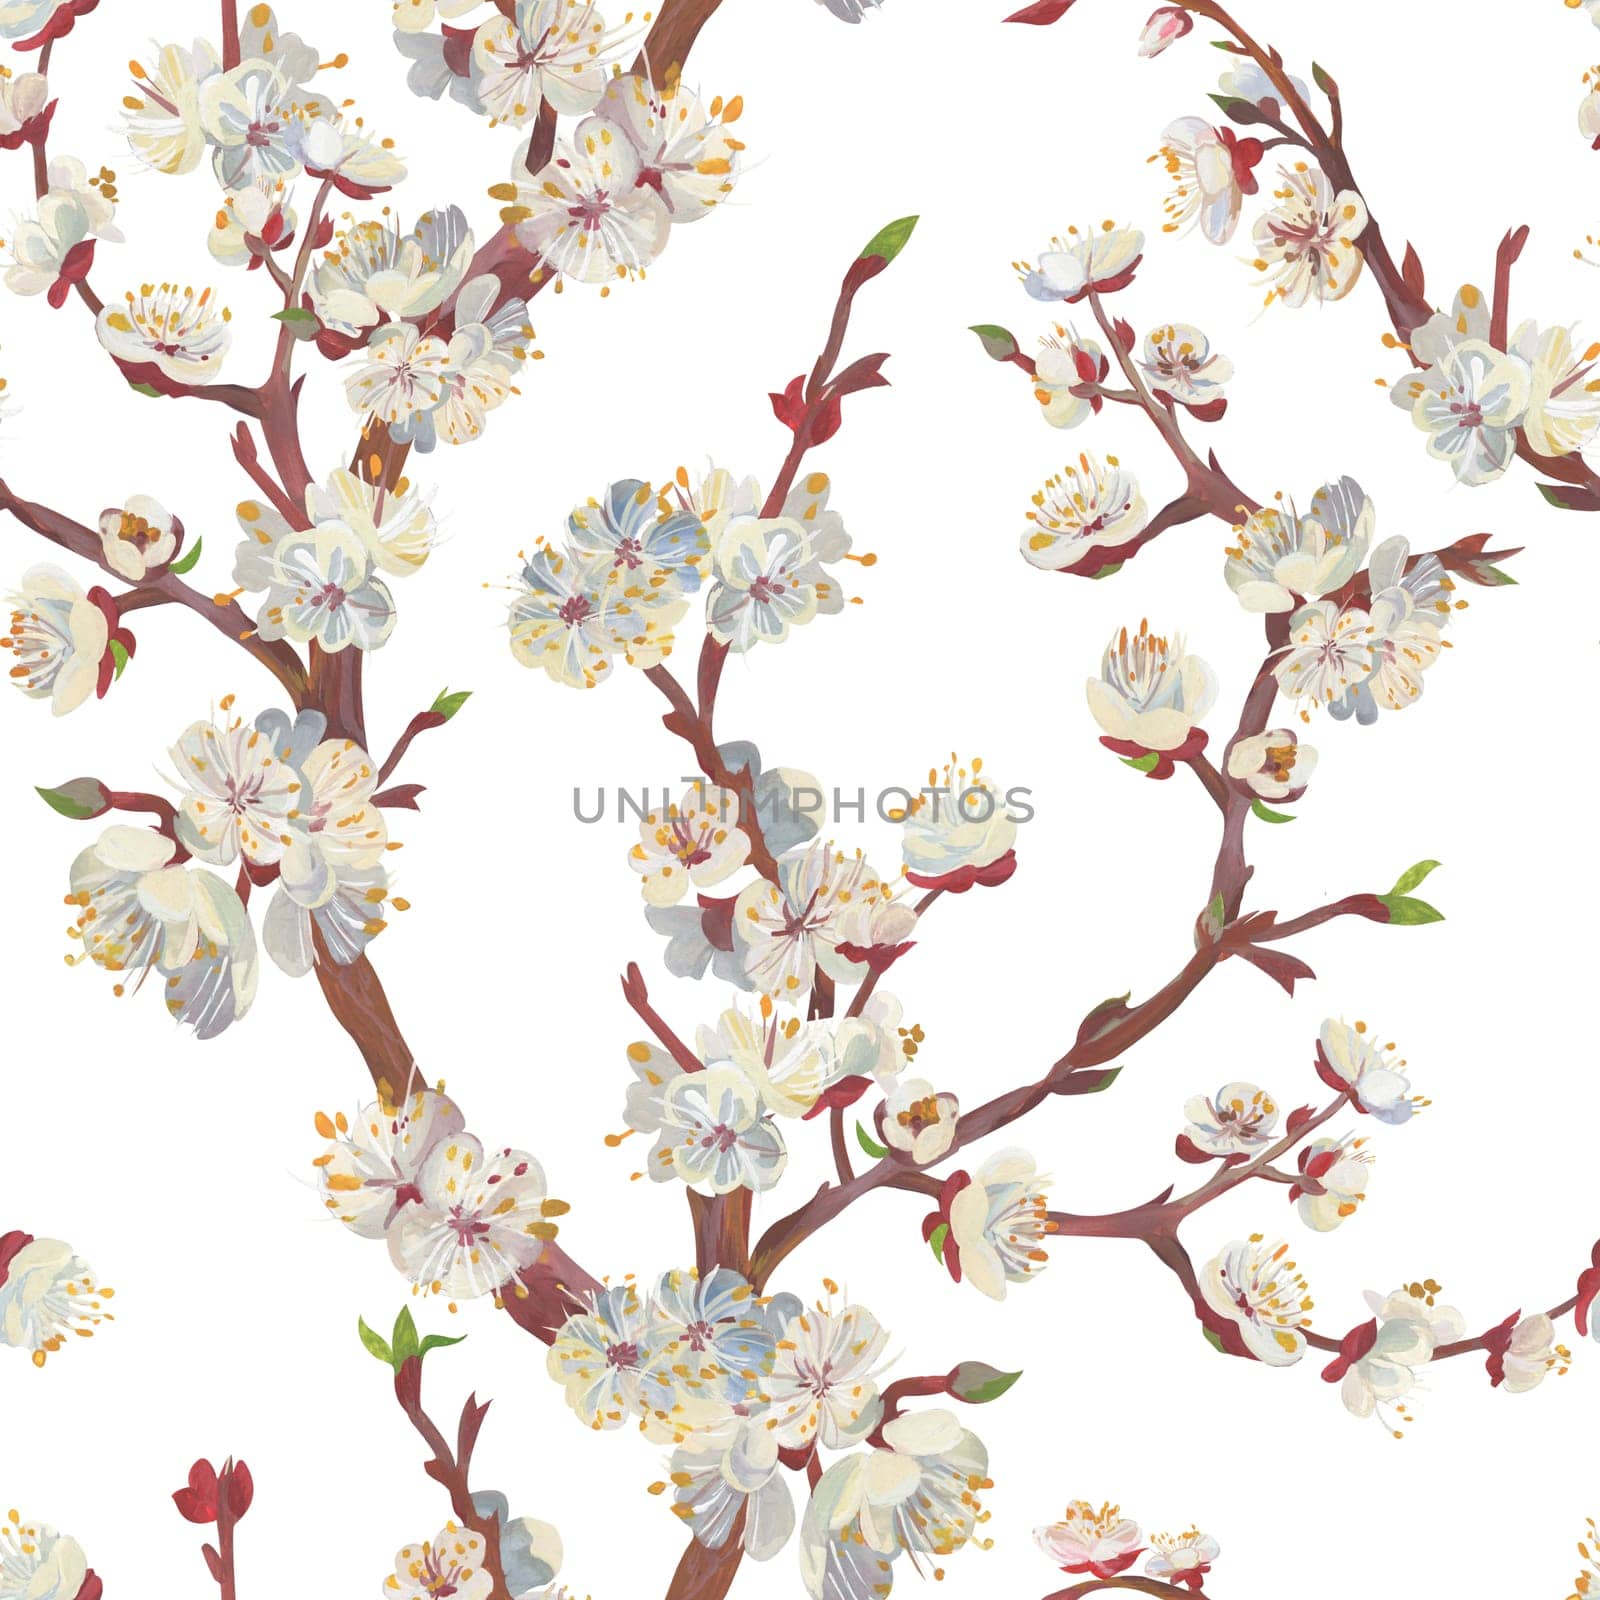 Botanical seamless pattern with sakura cherry branch drawn in gouache